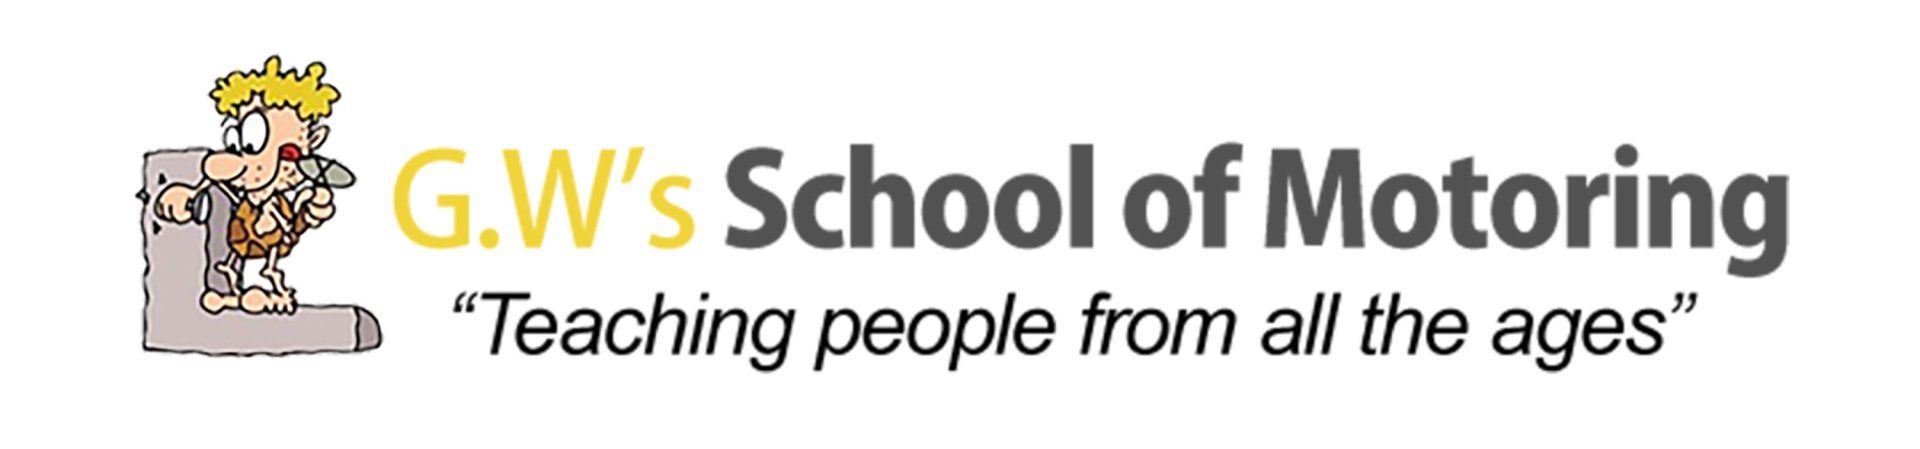 GWs School of Motoring Logo